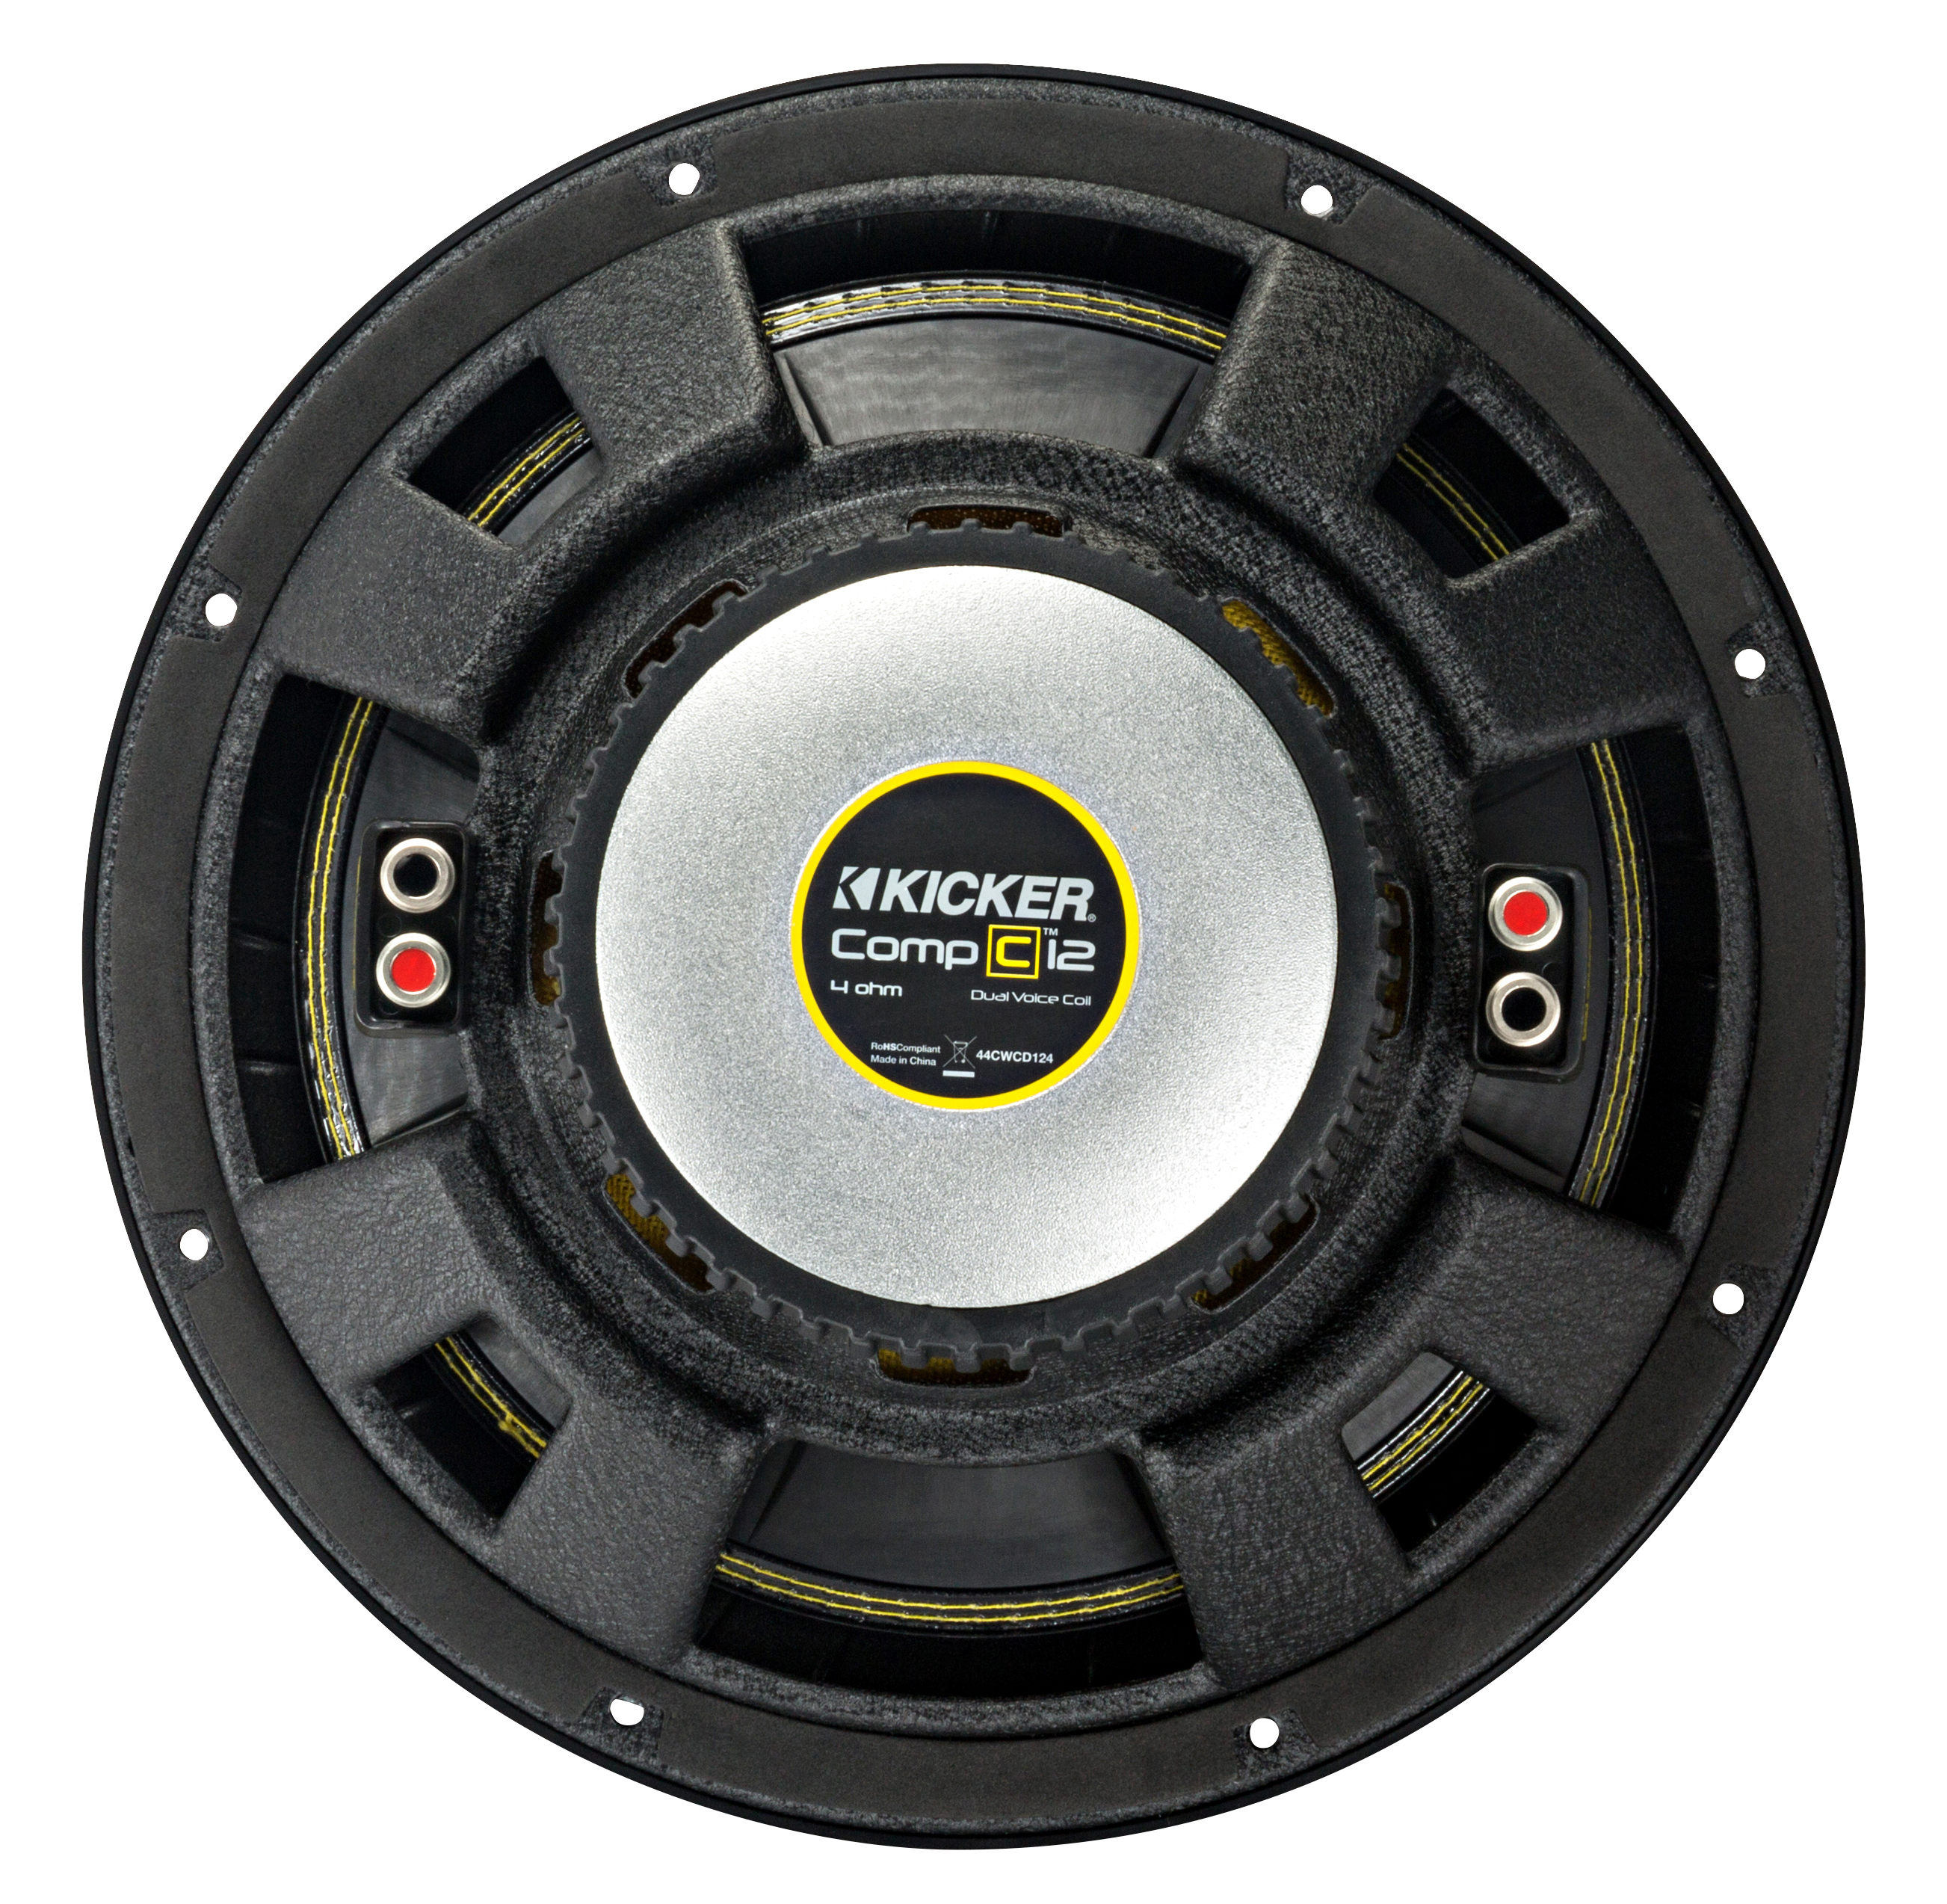 KICKER 12" Woofer CompC124 30cm Auto Hifi Subwoofer Bassbox 600 Watt MAX